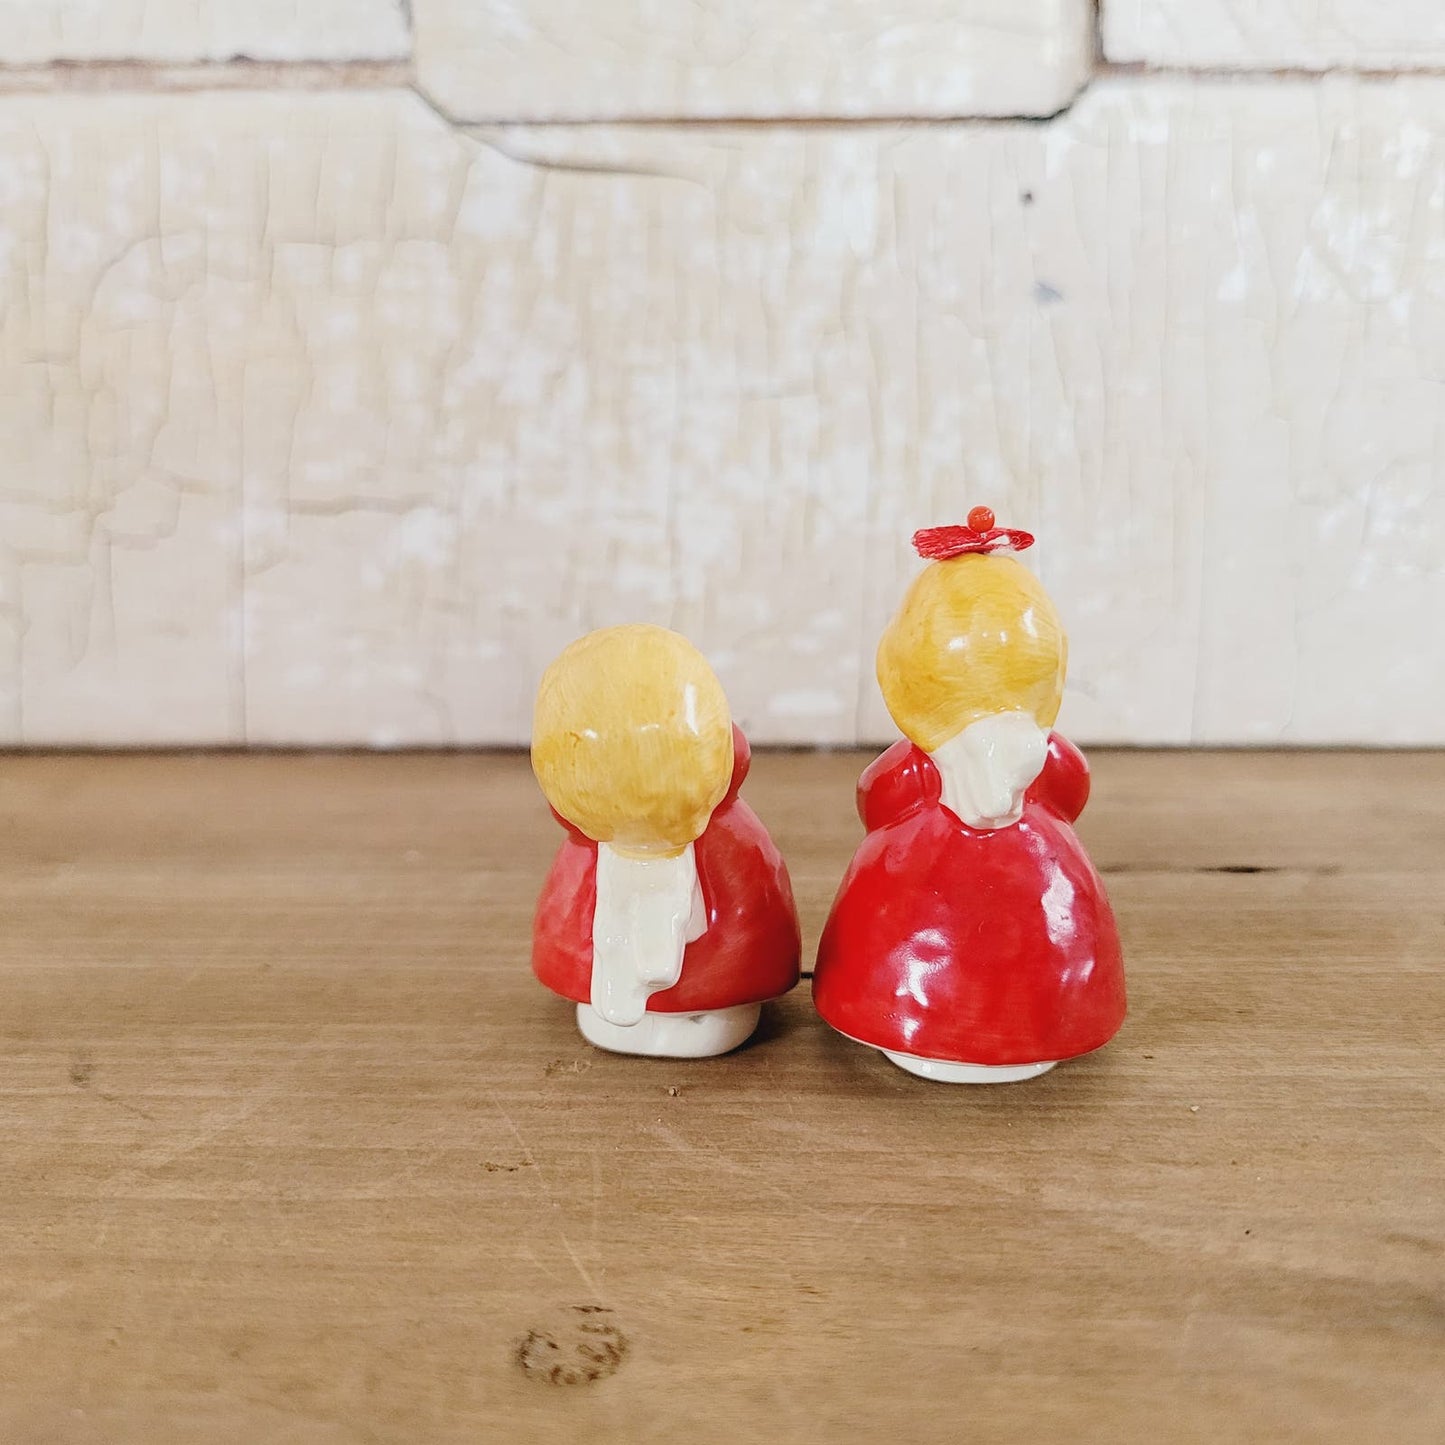 2 Goebel Angel Figurines Small Red Singing Angels Made in West Germany Vintage